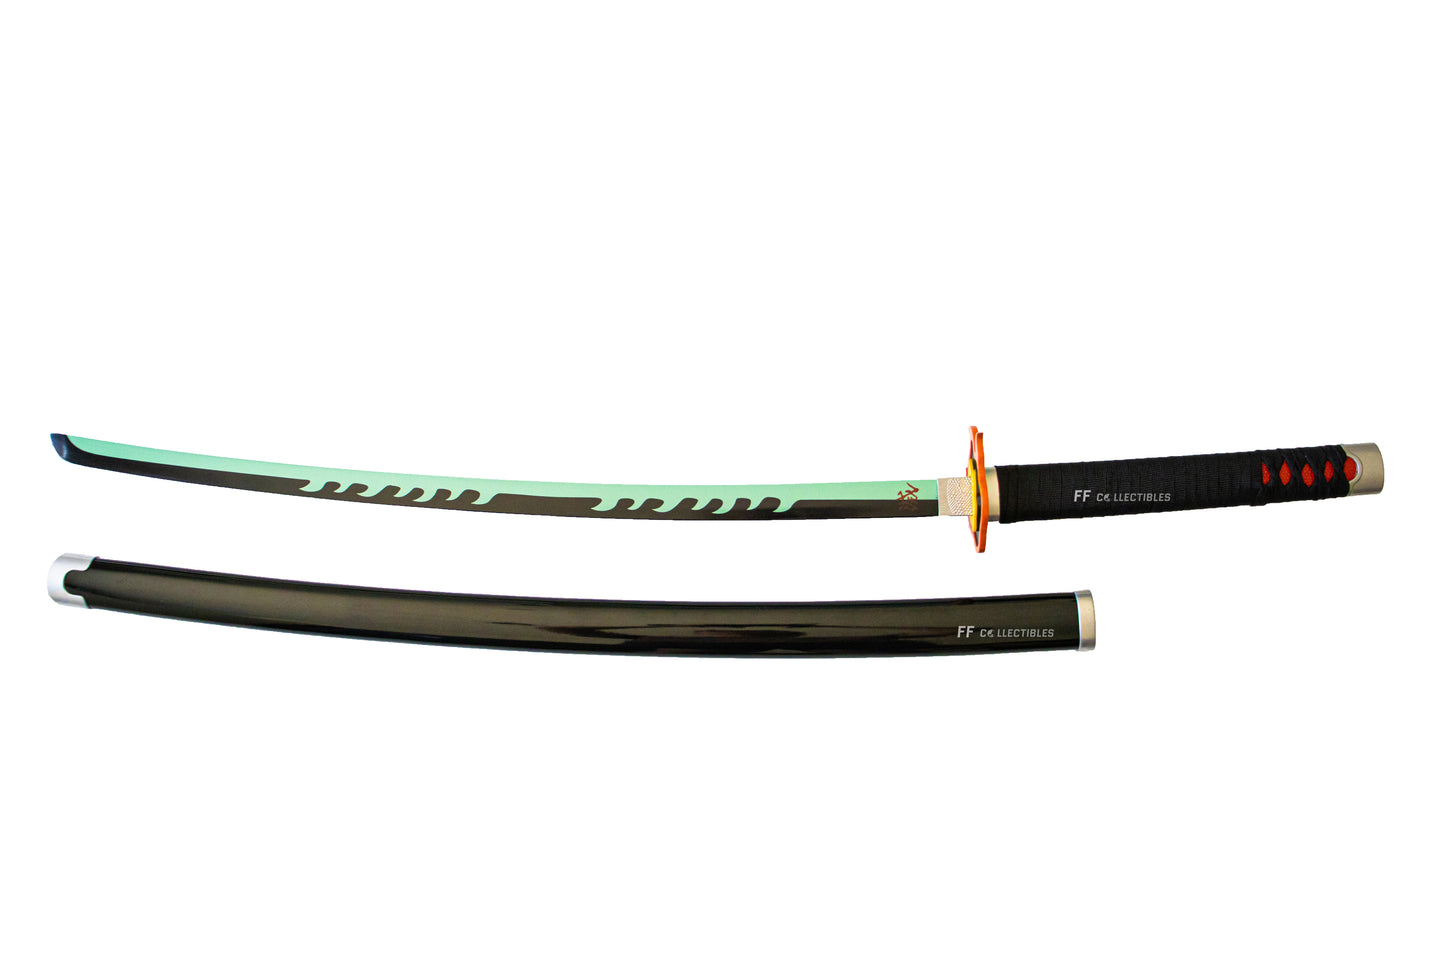 DEMON SLAYER - TANJIRO KAMADO'S NICHIRIN SWORD FINAL VERSION (FREE sword stand)